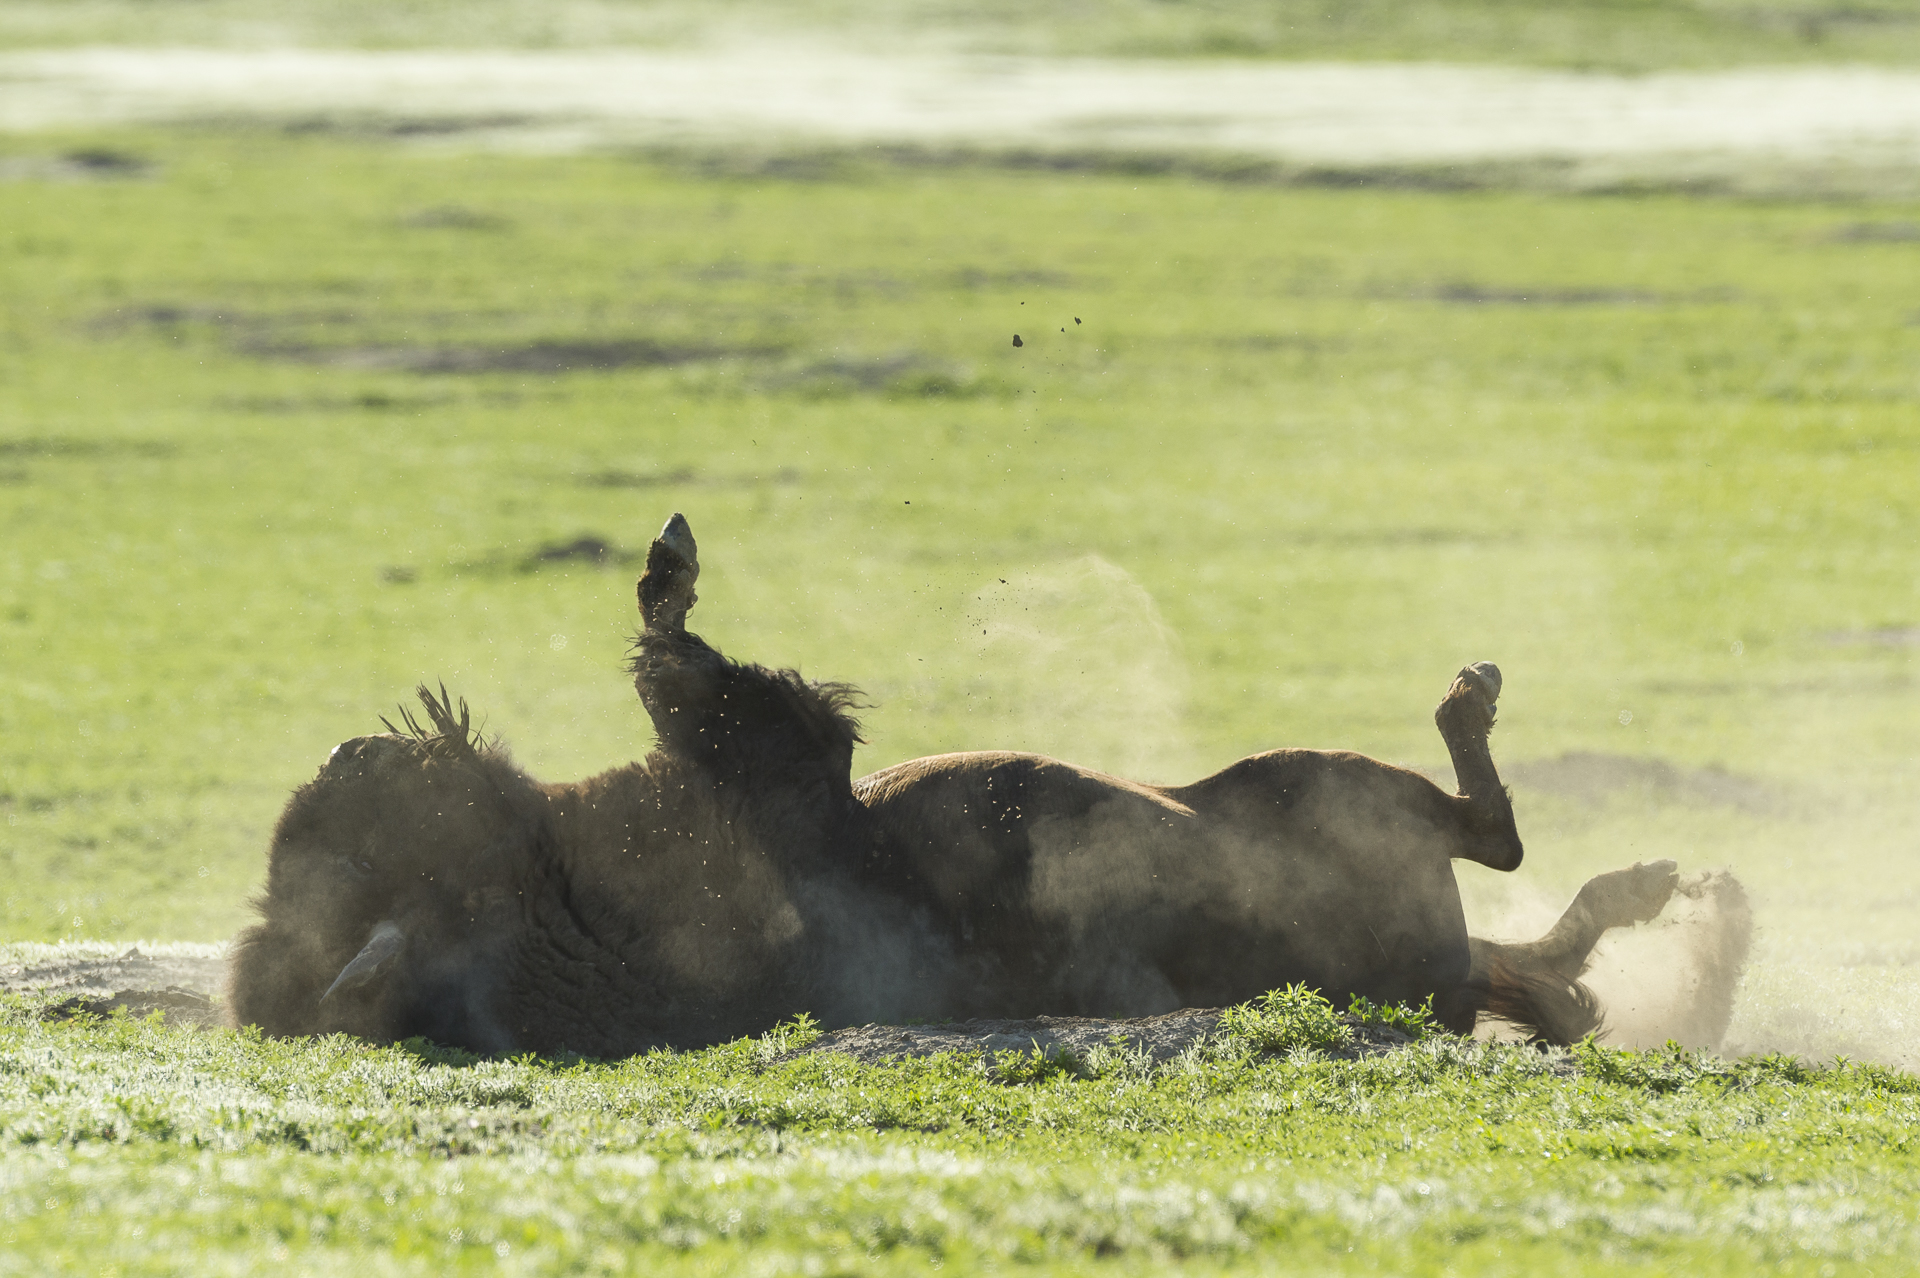 Bull bison dust bathing